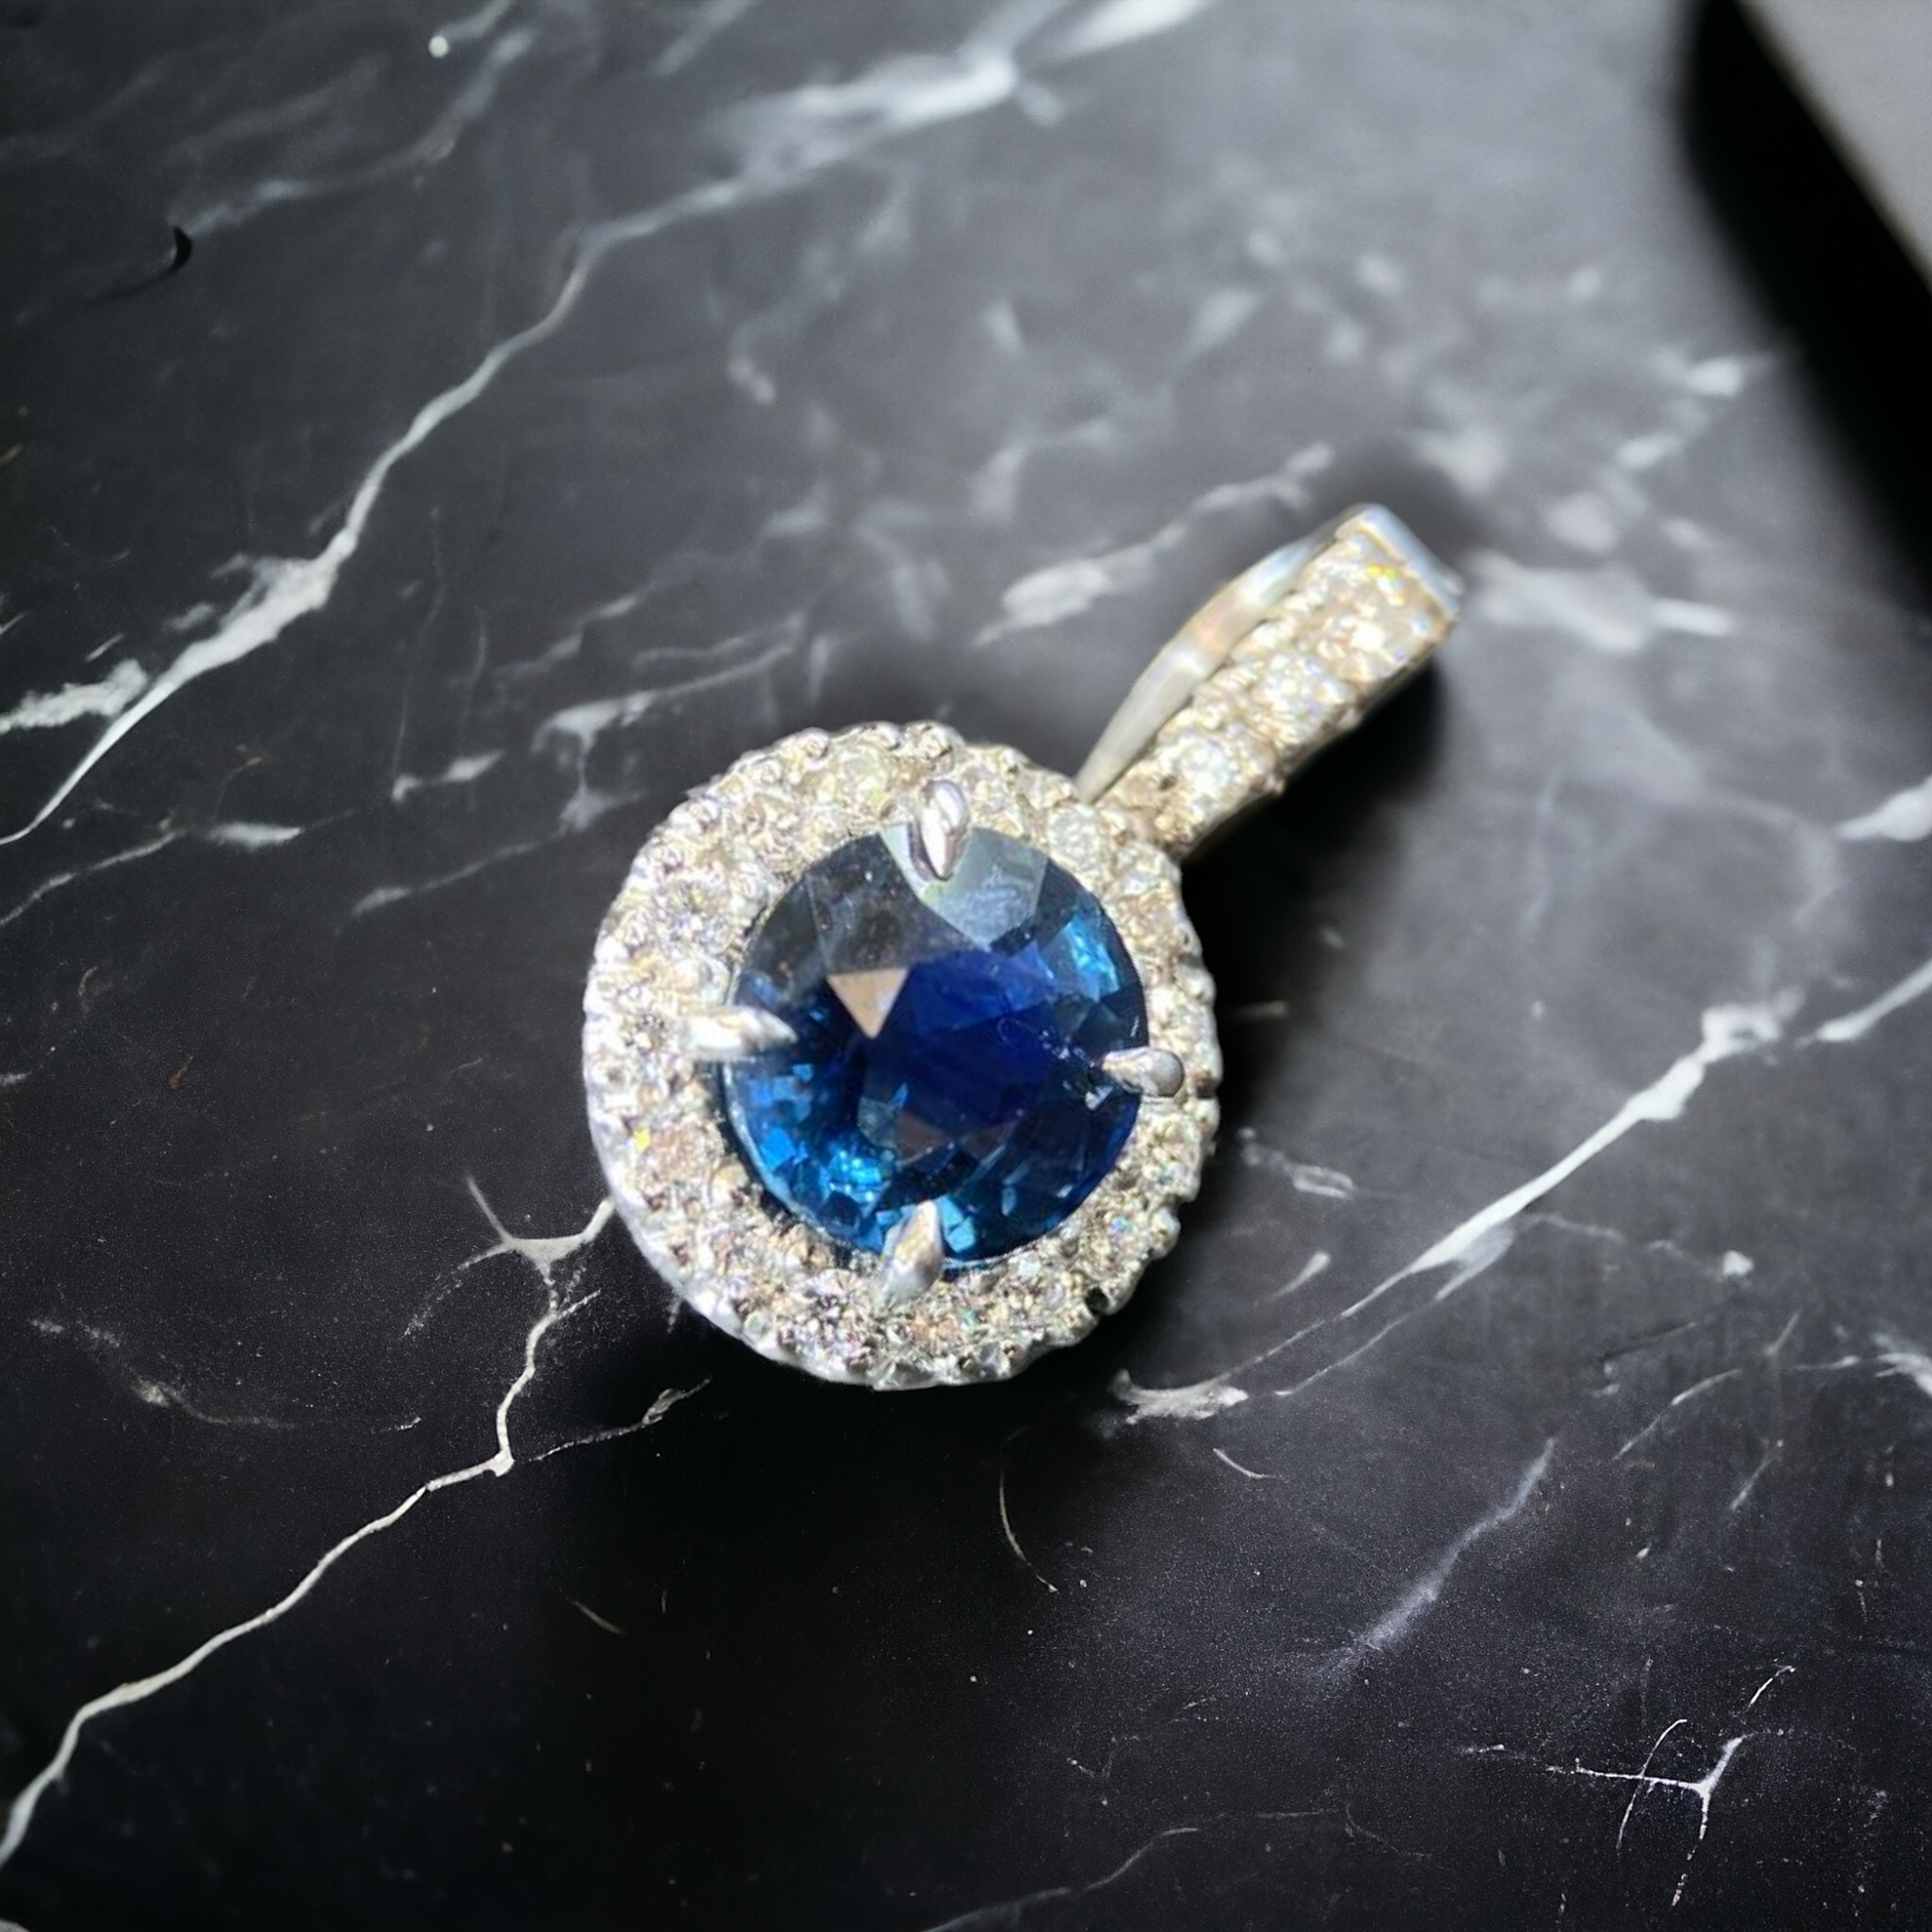 Handmade 18K white gold pendant 1.58 ct. natural Royal blue Sapphire & natural Vvs1 quality Diamonds.